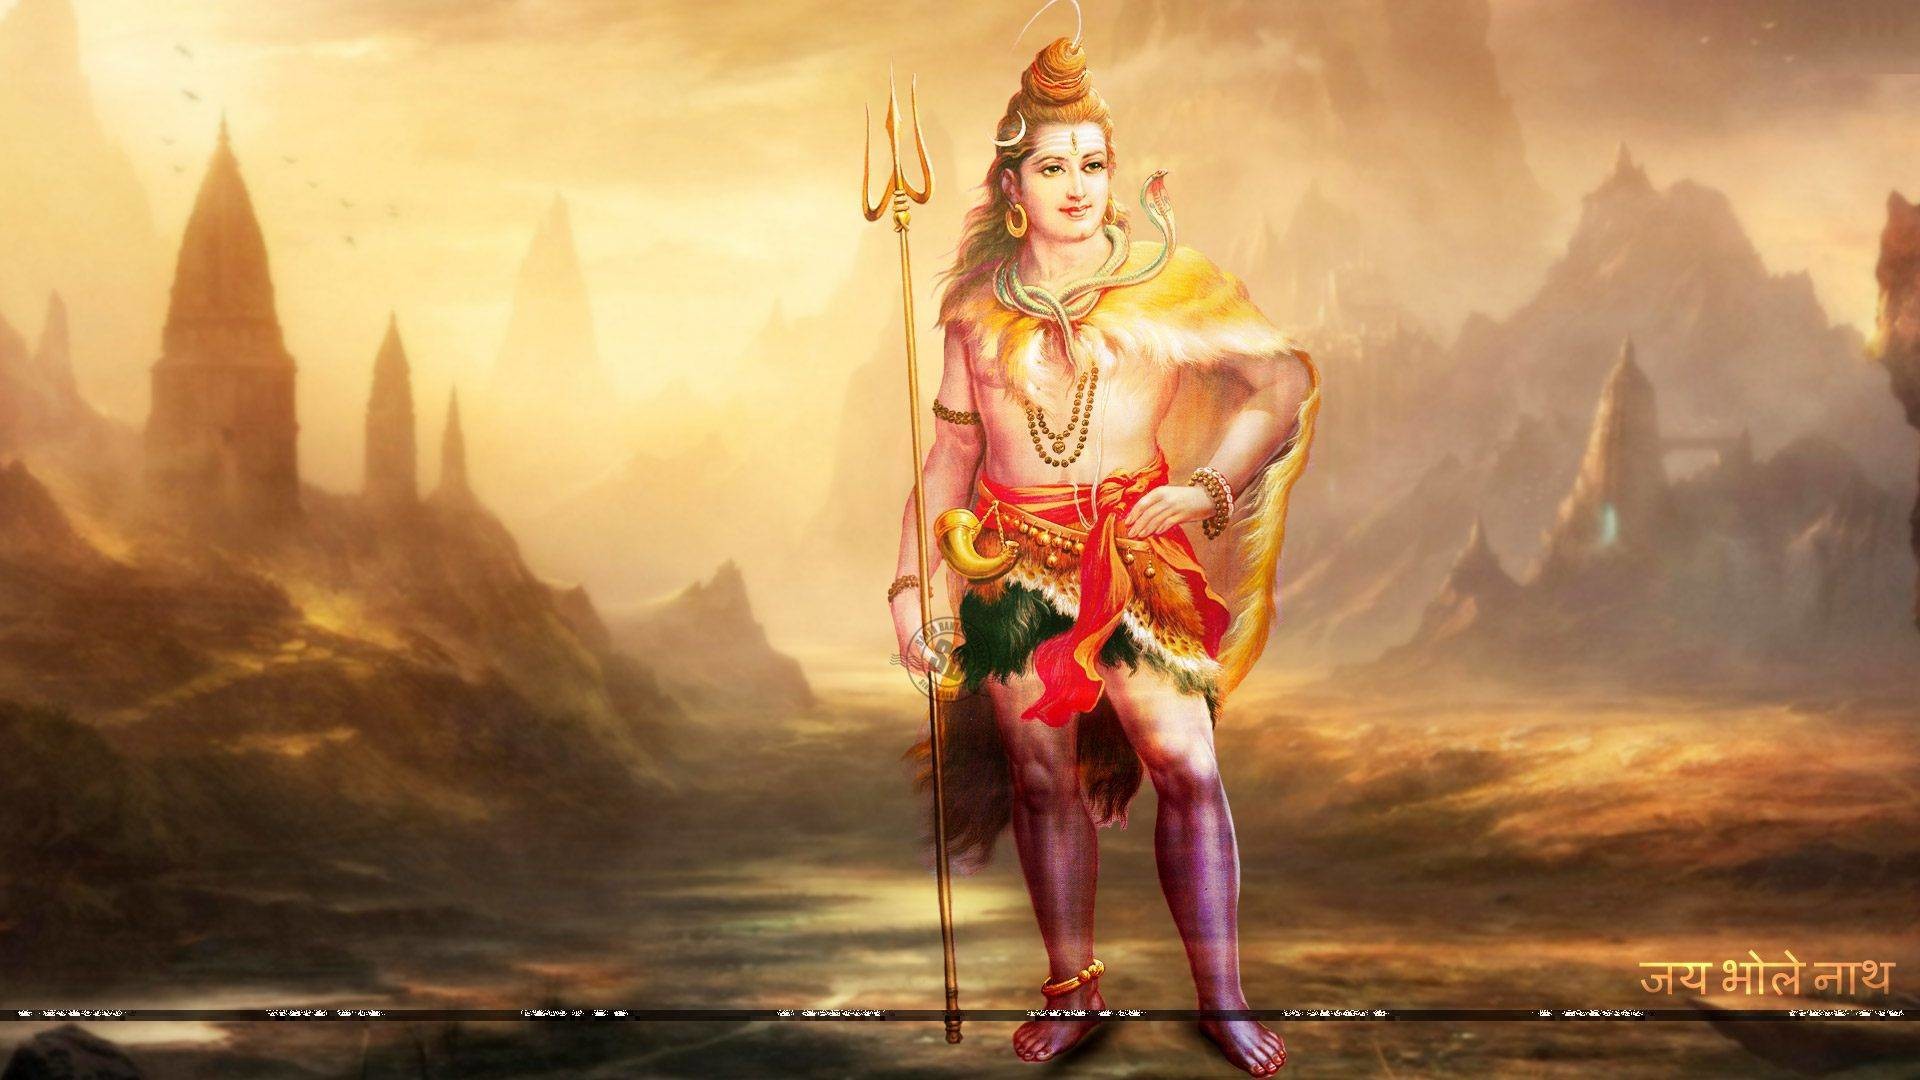 hindu god wallpaper hd 1920x1080,cg artwork,mythology,illustration,art,fictional character